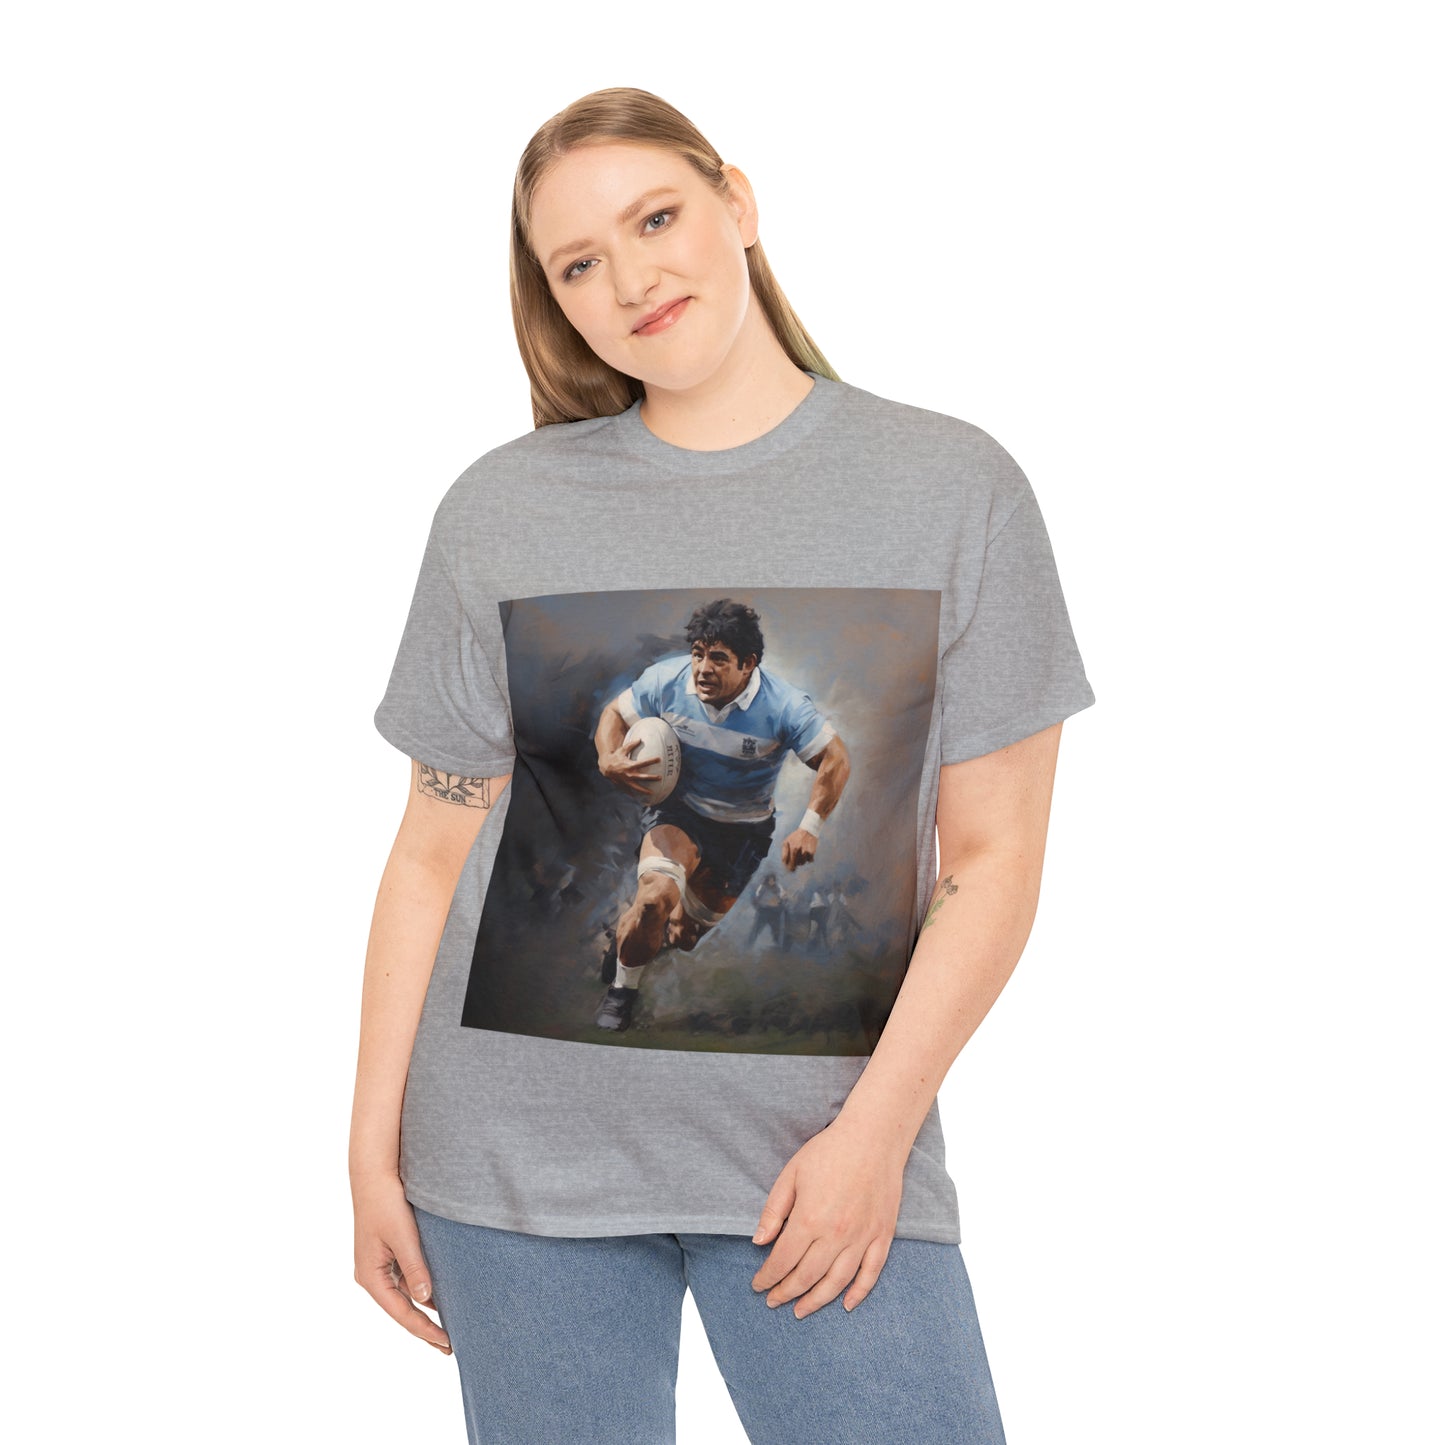 Rugby Maradona - light shirts